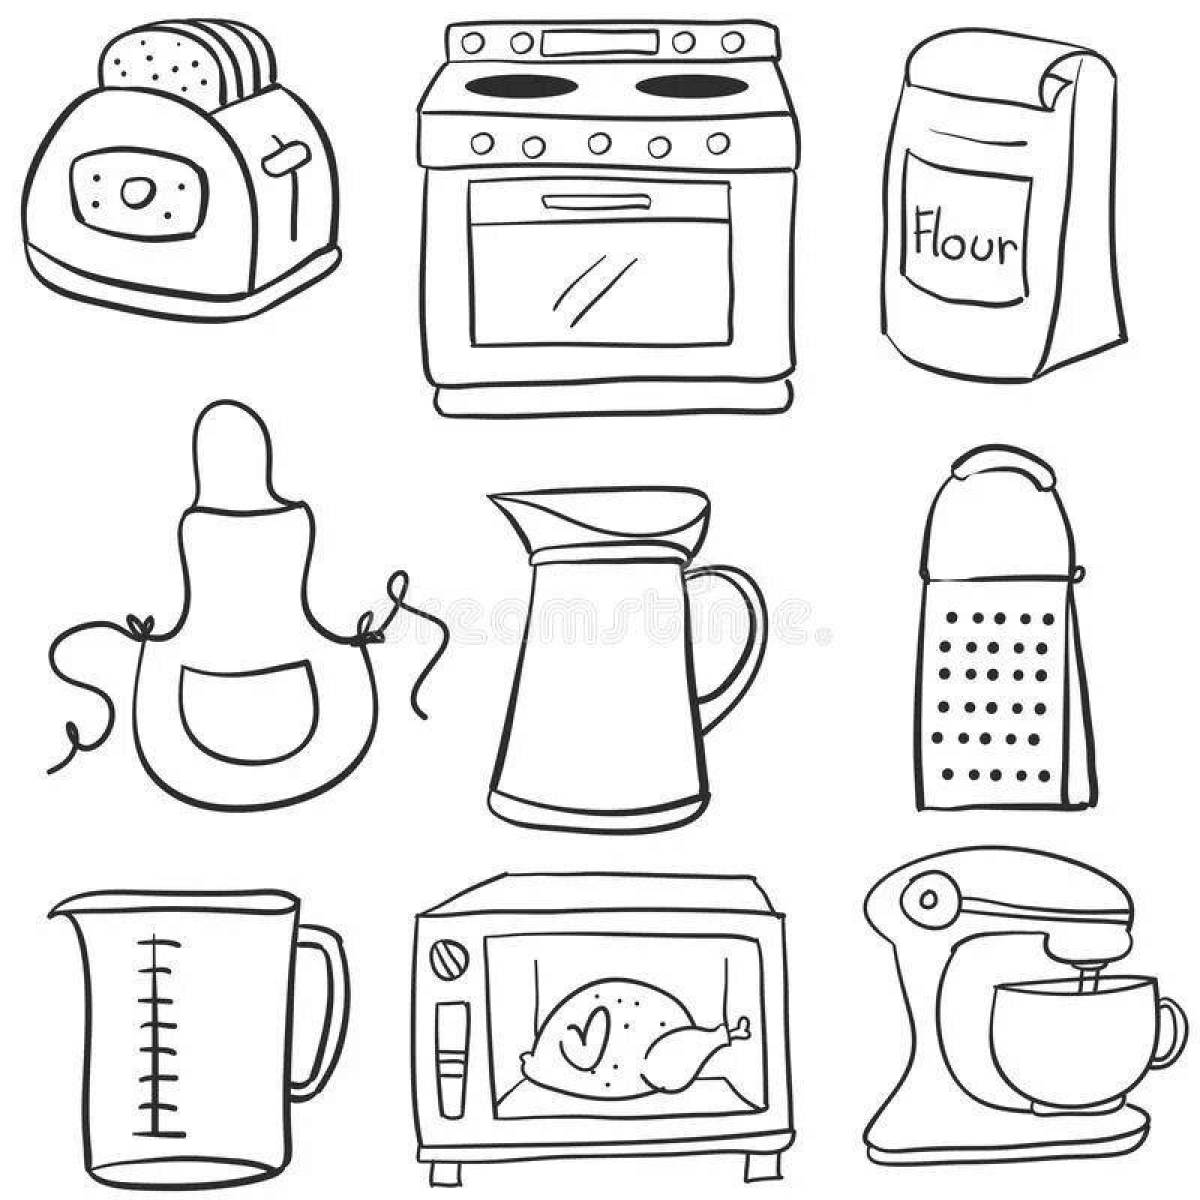 Fancy kitchen appliances coloring page